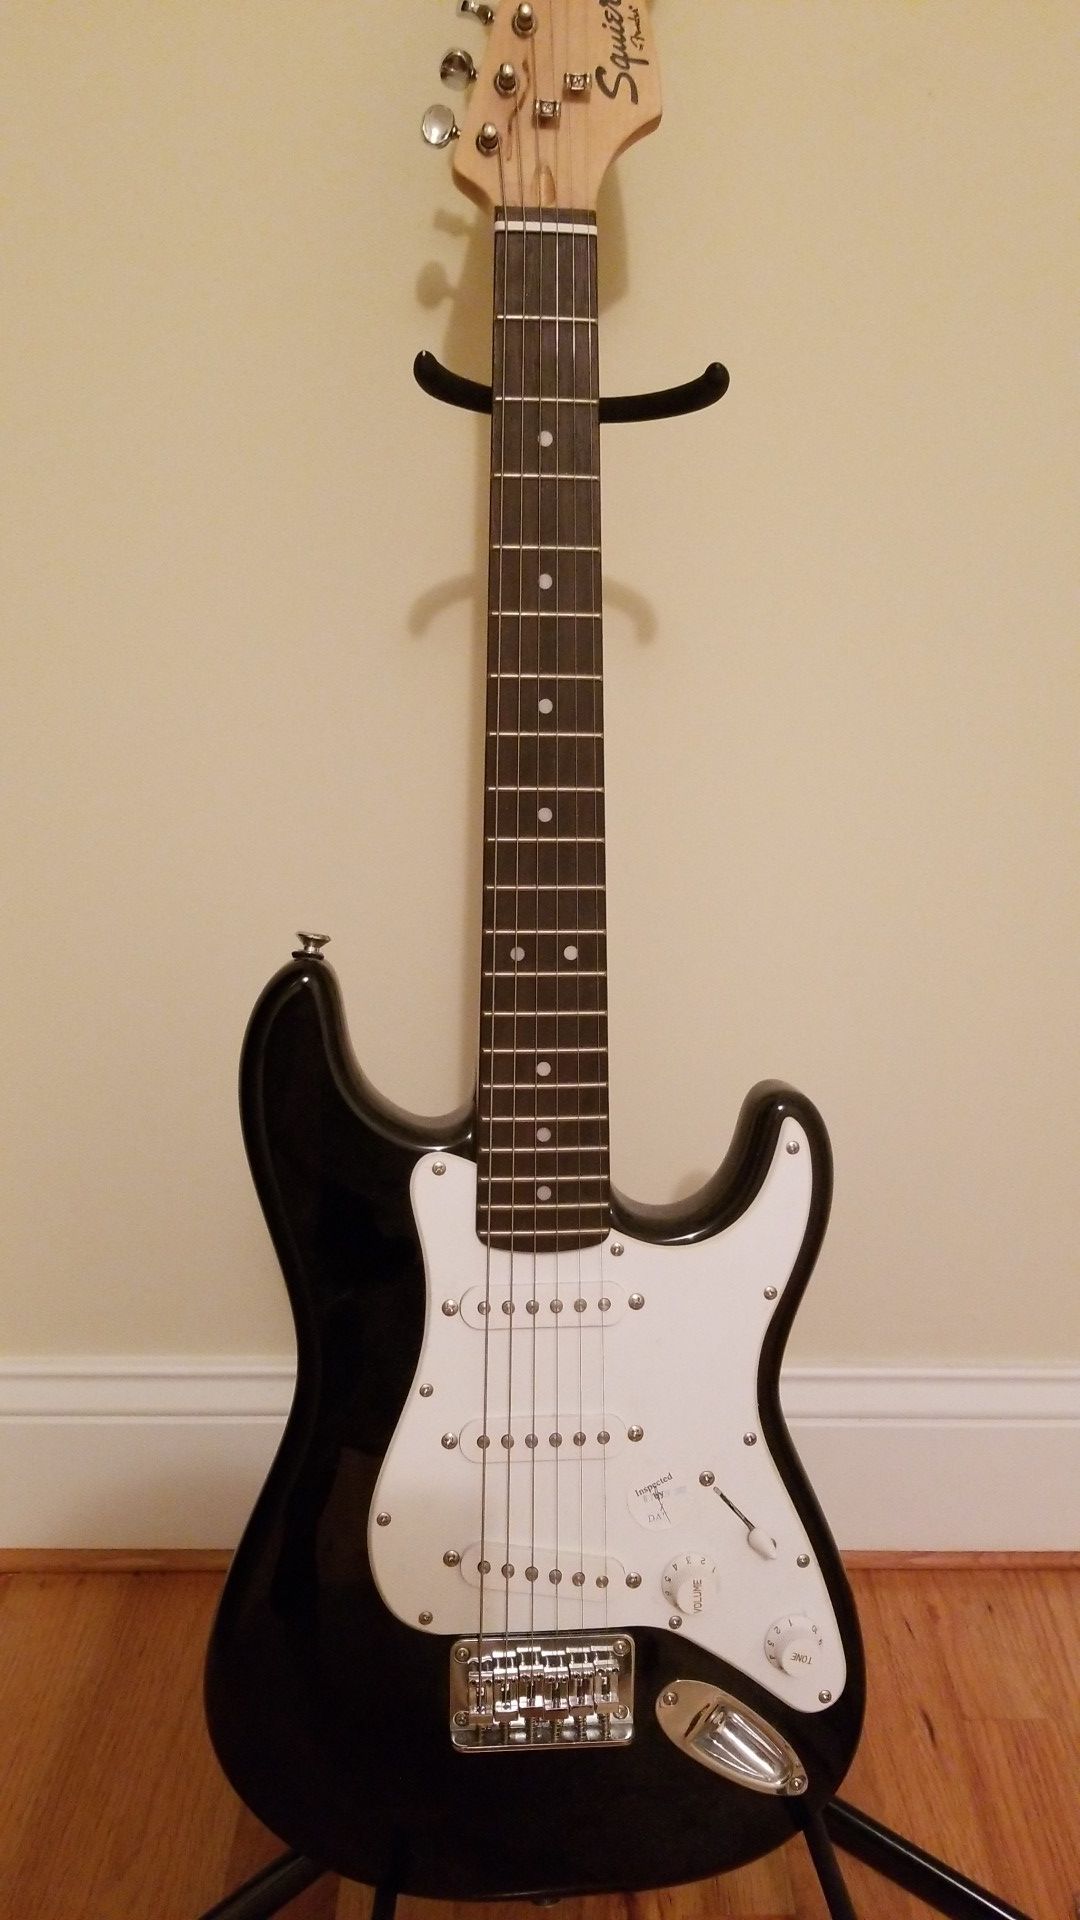 Squier Mini Guitar by Fender